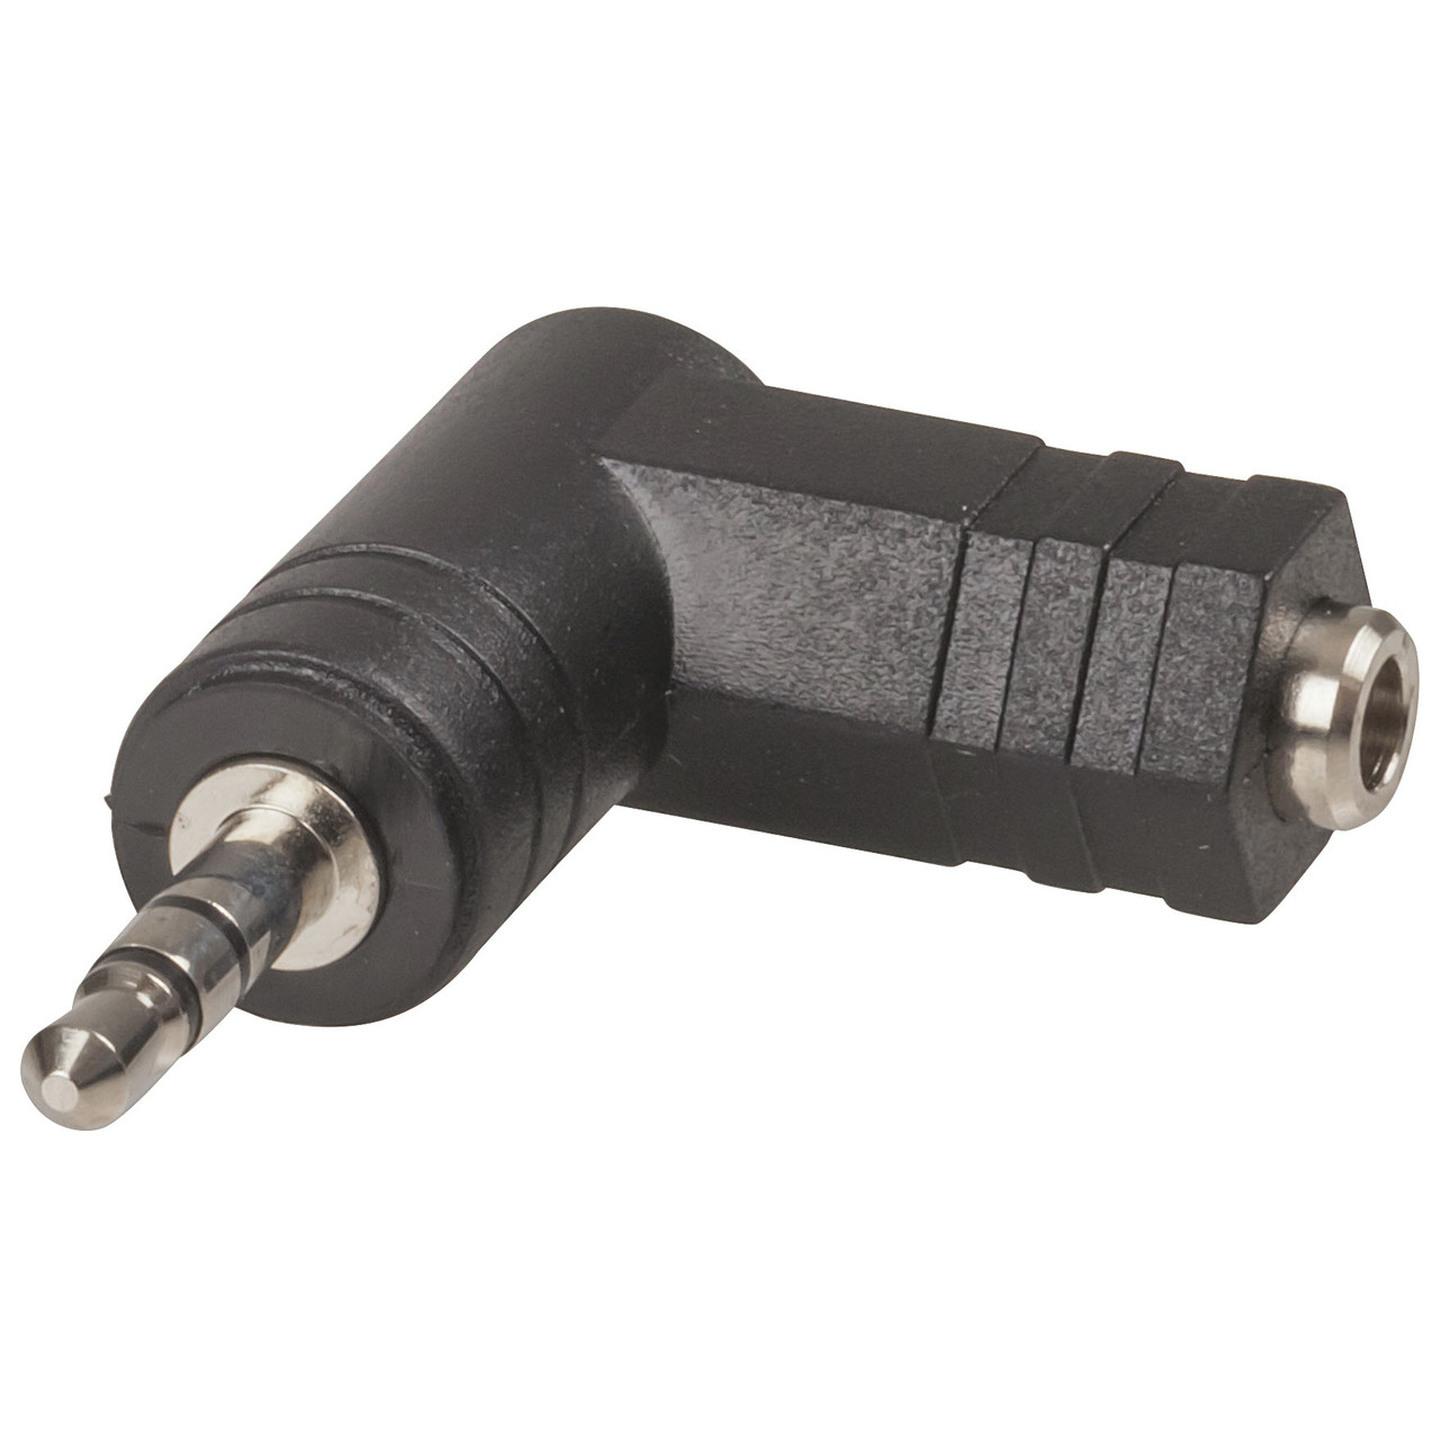 Adaptor 3.5mm Stereo Socket - 3.5mm Stereo Plug Right Angle